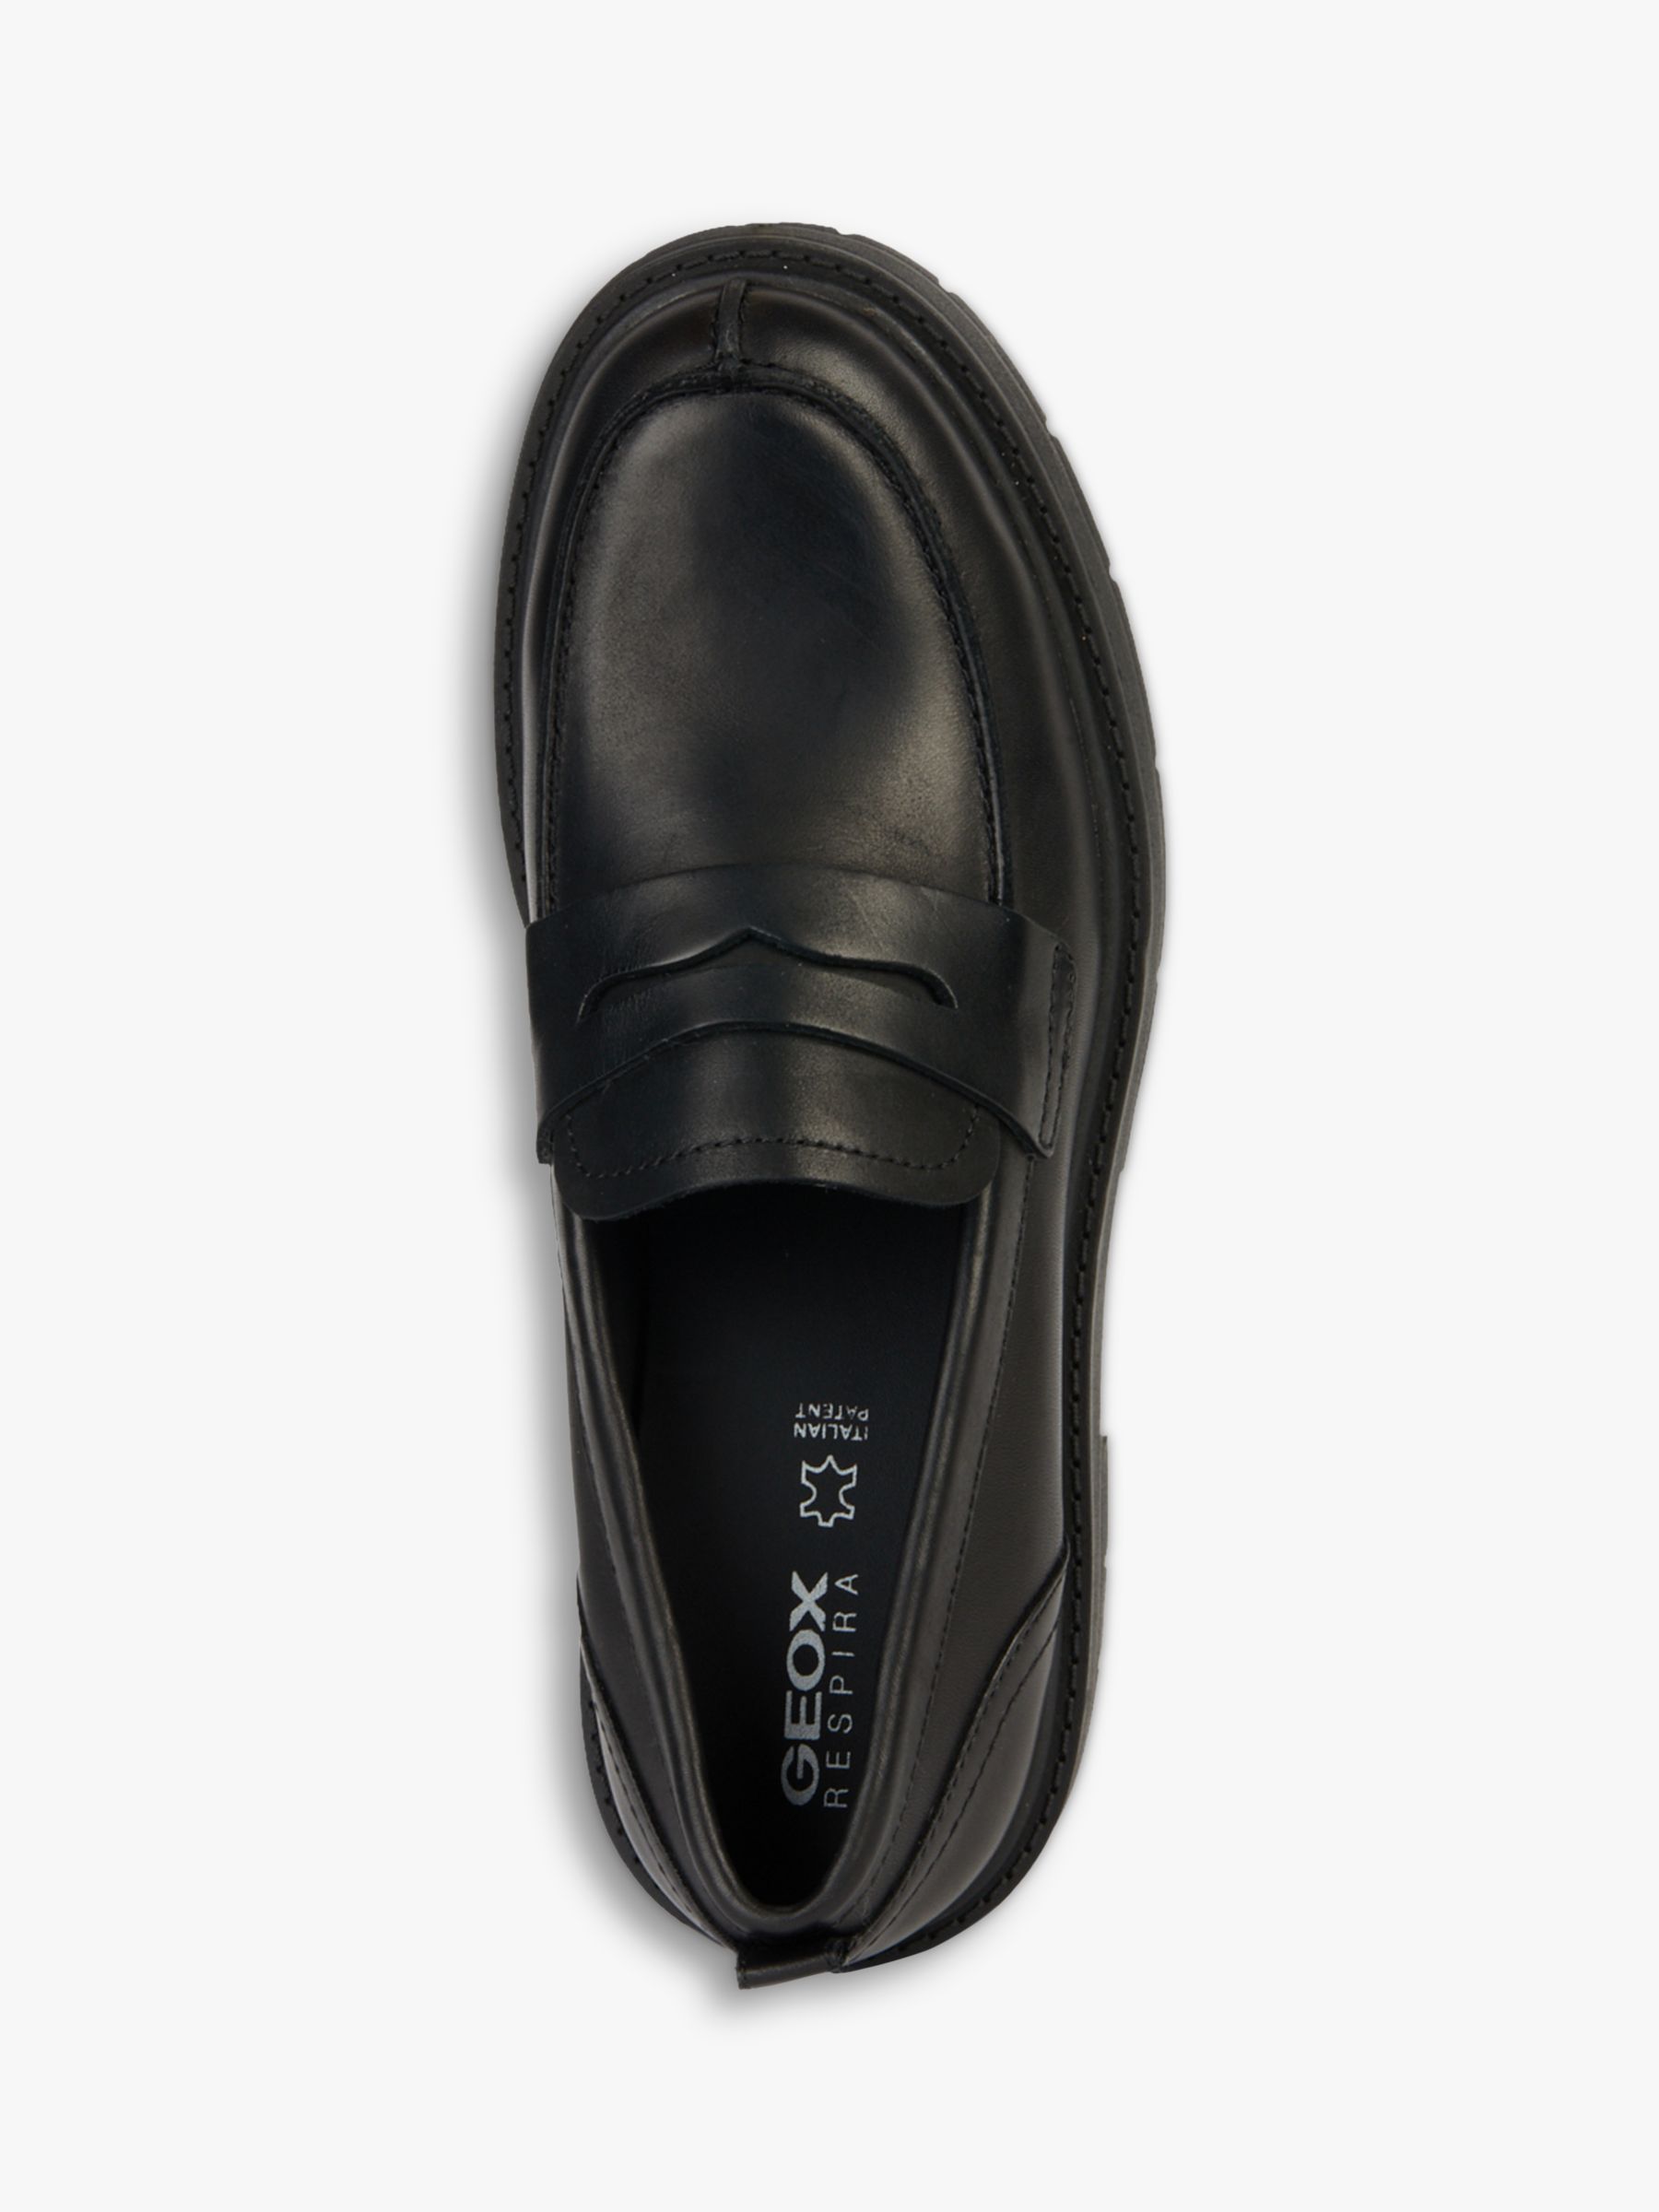 Geox D Spherica EC7 Leather Loafers, Black, 4